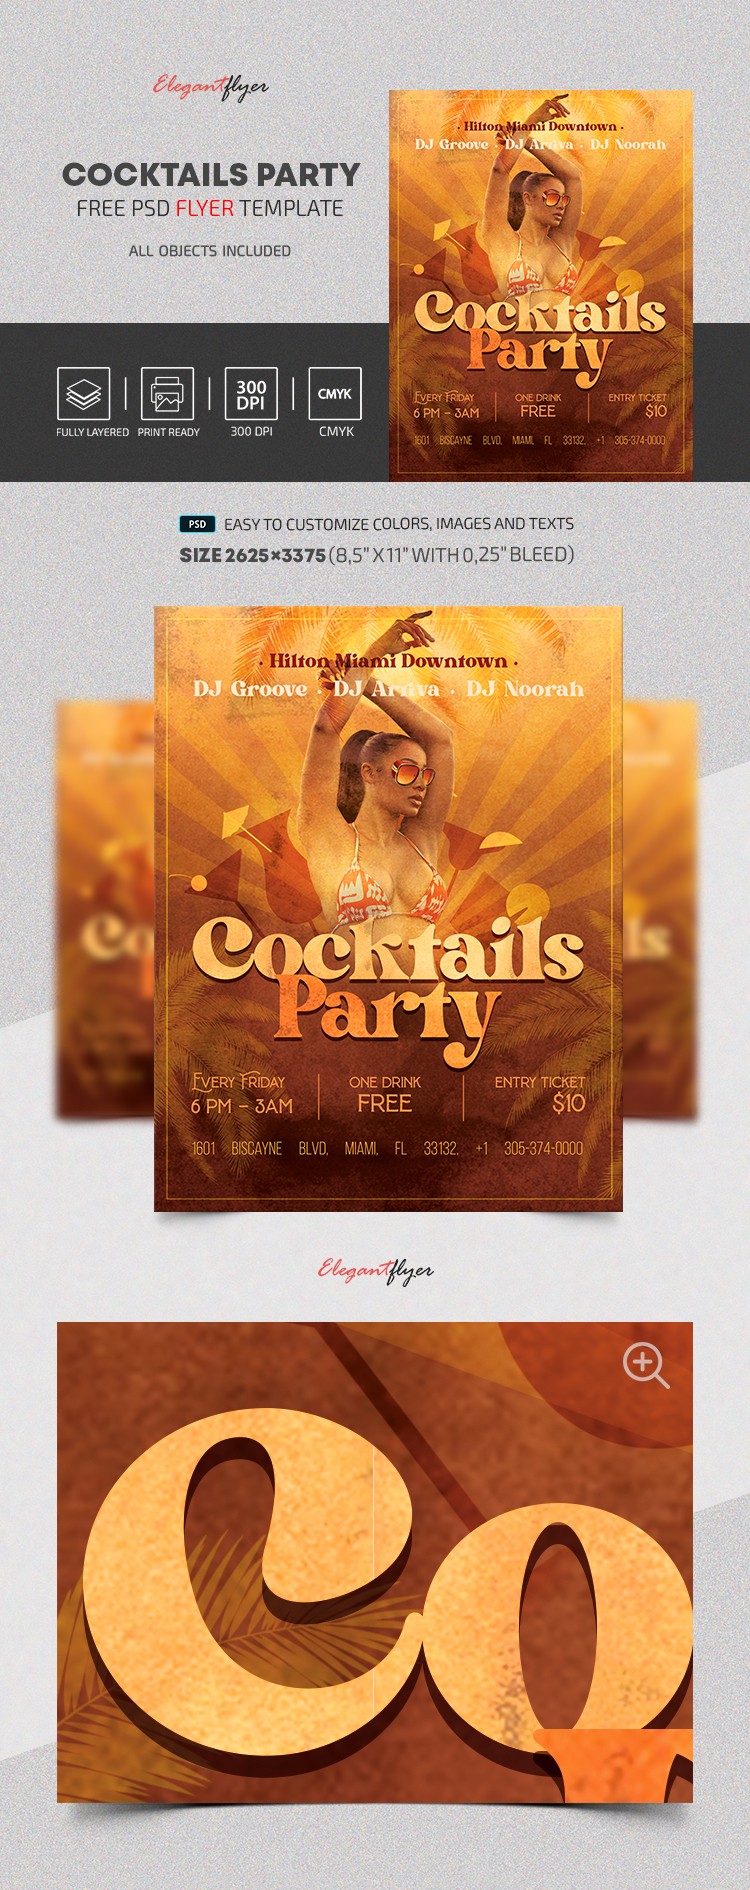 Cocktails Party Flyer by ElegantFlyer